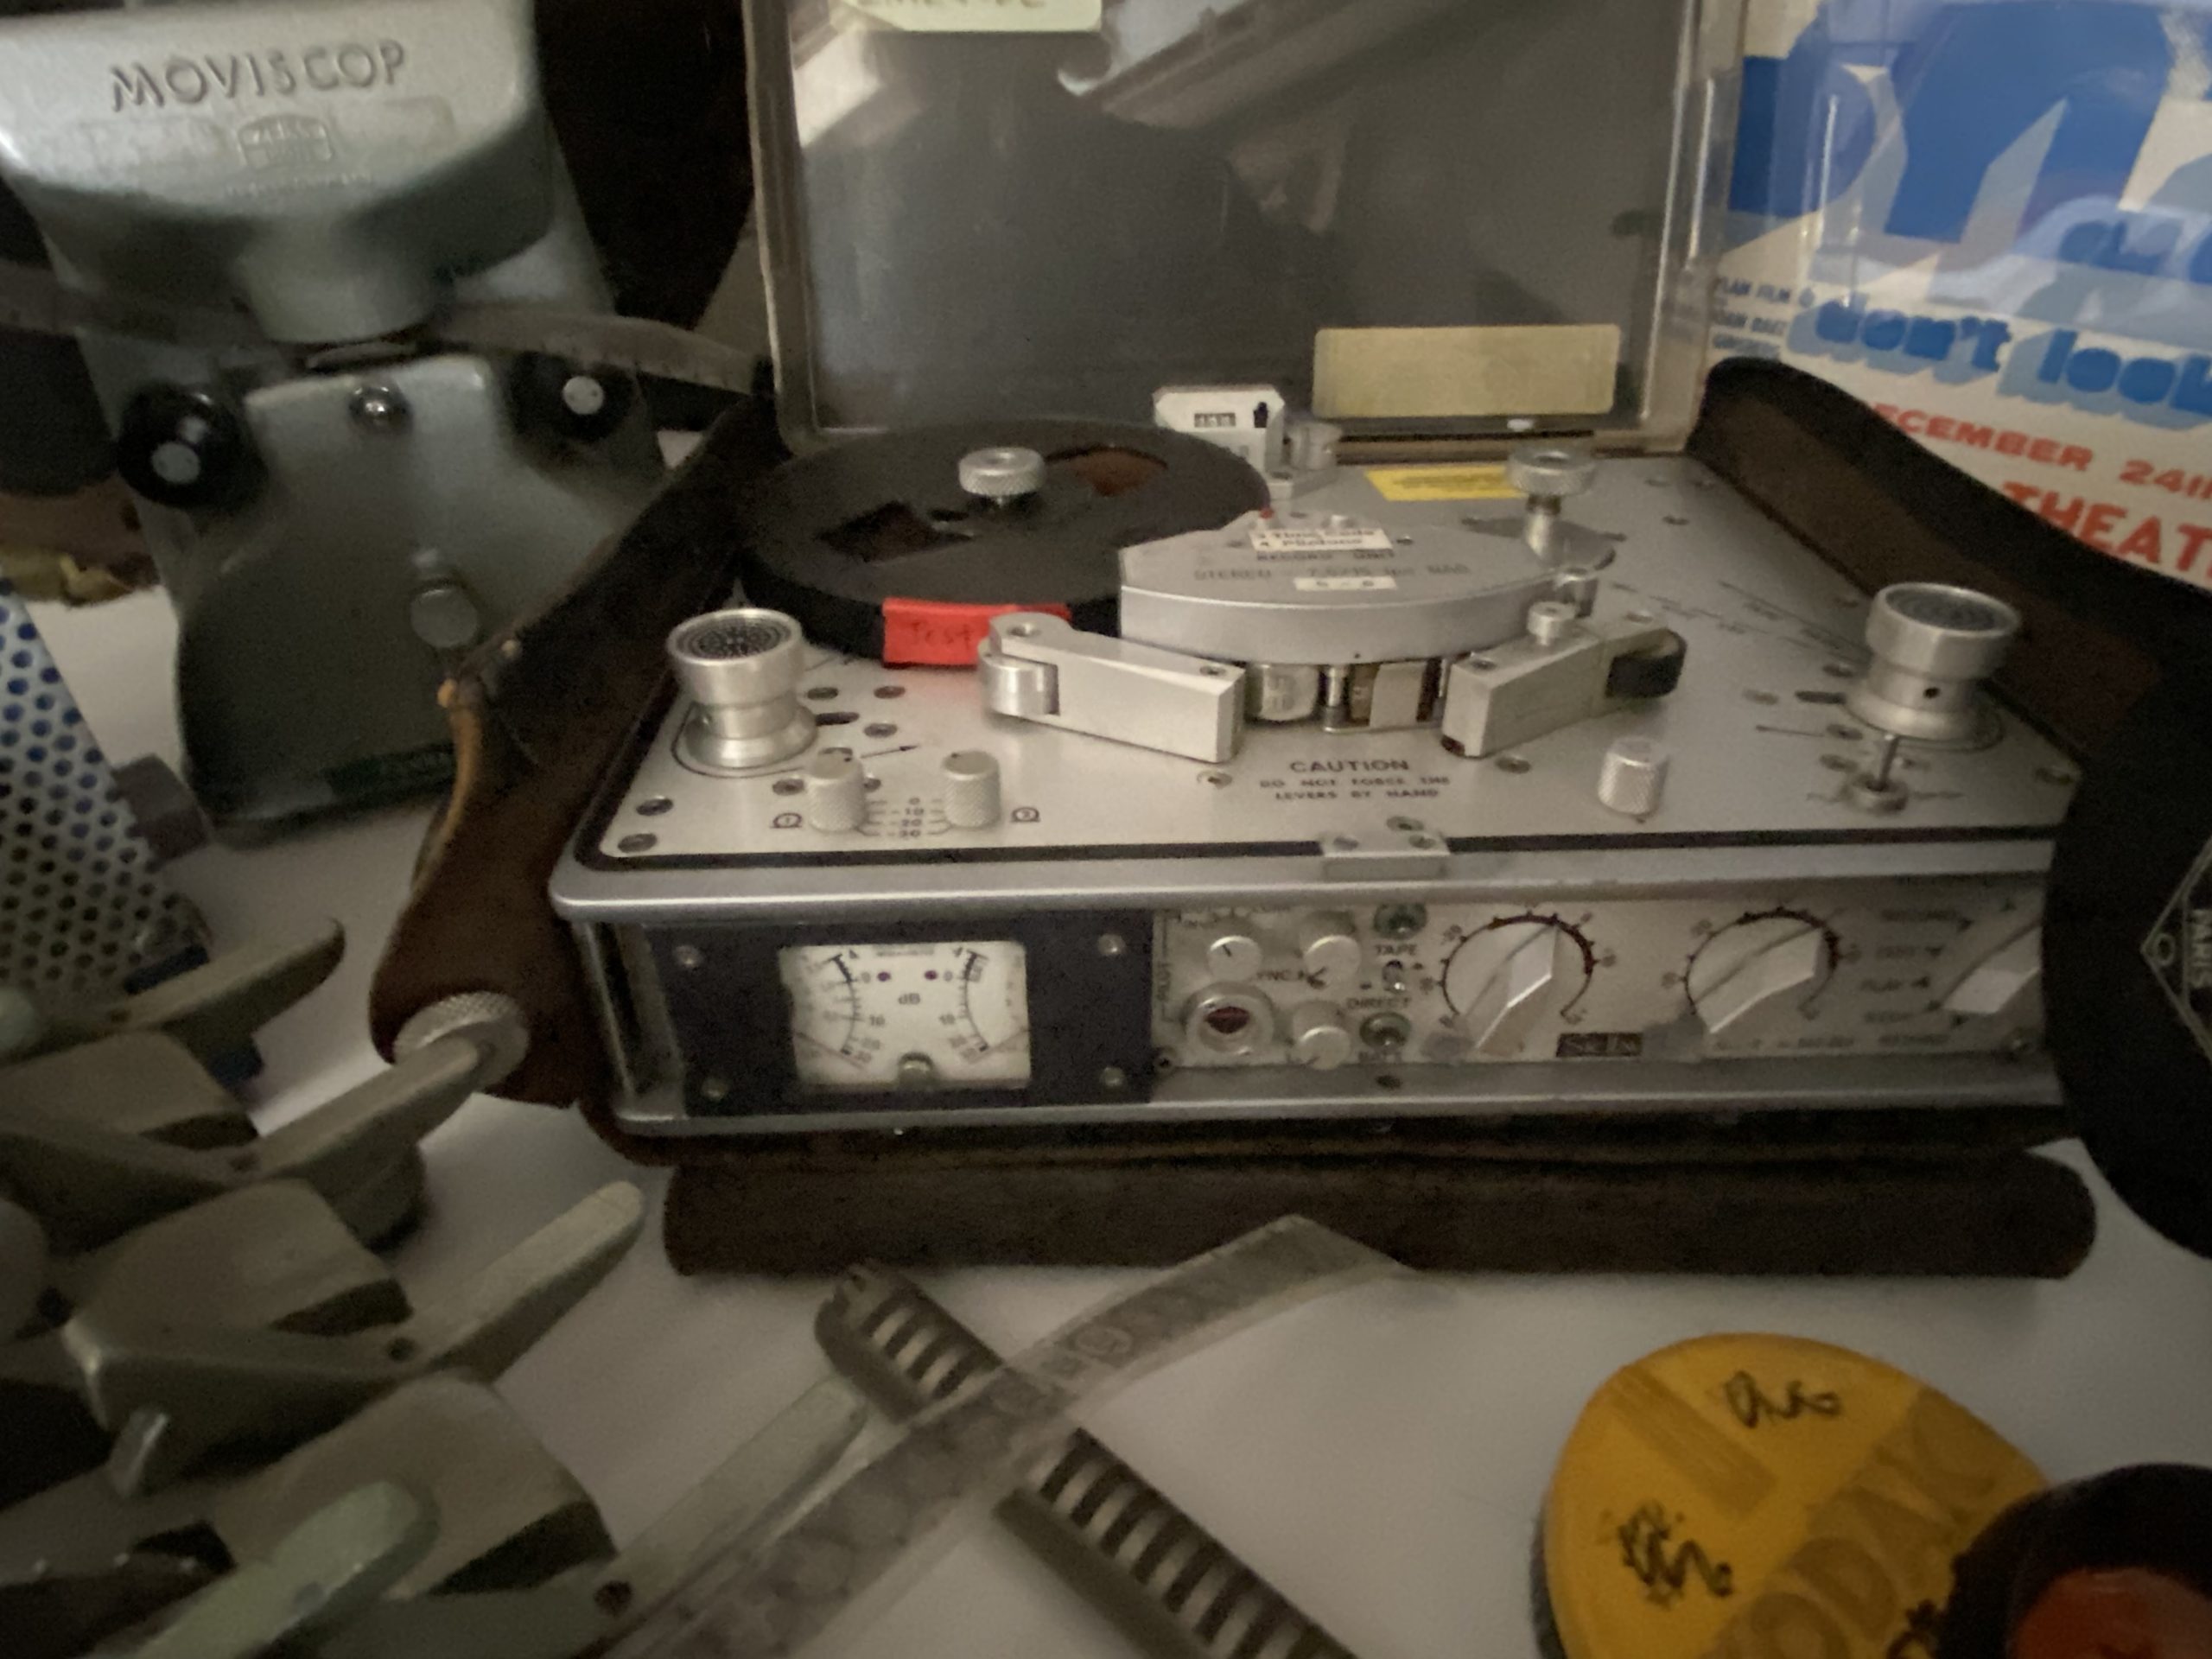 A film recorder belonging to Chris Hegedus.